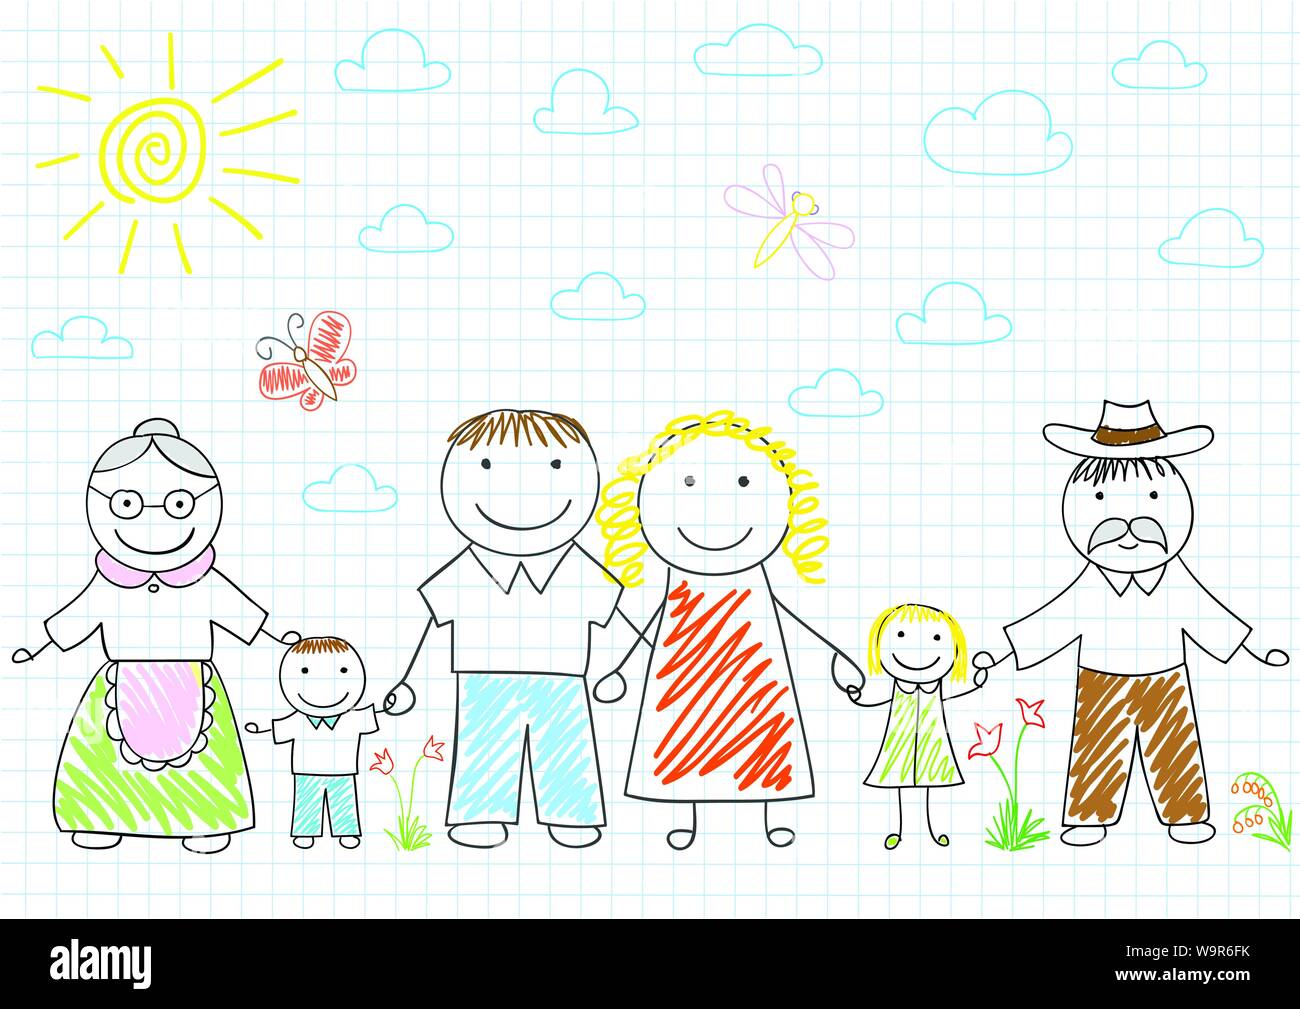 Happy family drawing isolated icon design Stock Vector by ©yupiramos  113684428